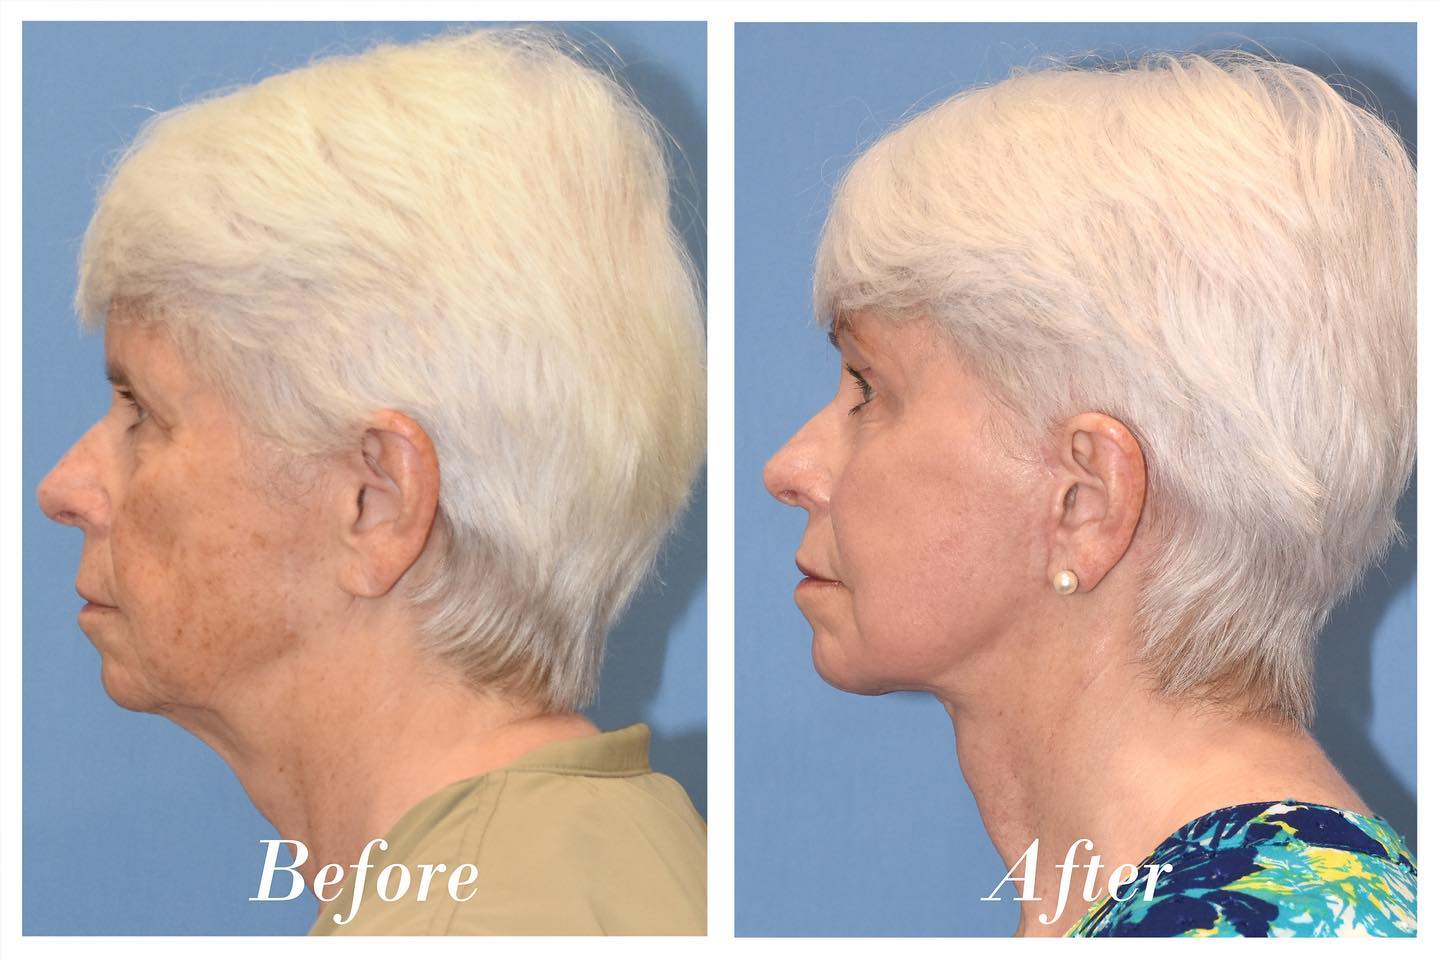 Facelift Browlift C02 Laser Skin Resurfacing Before & After Image